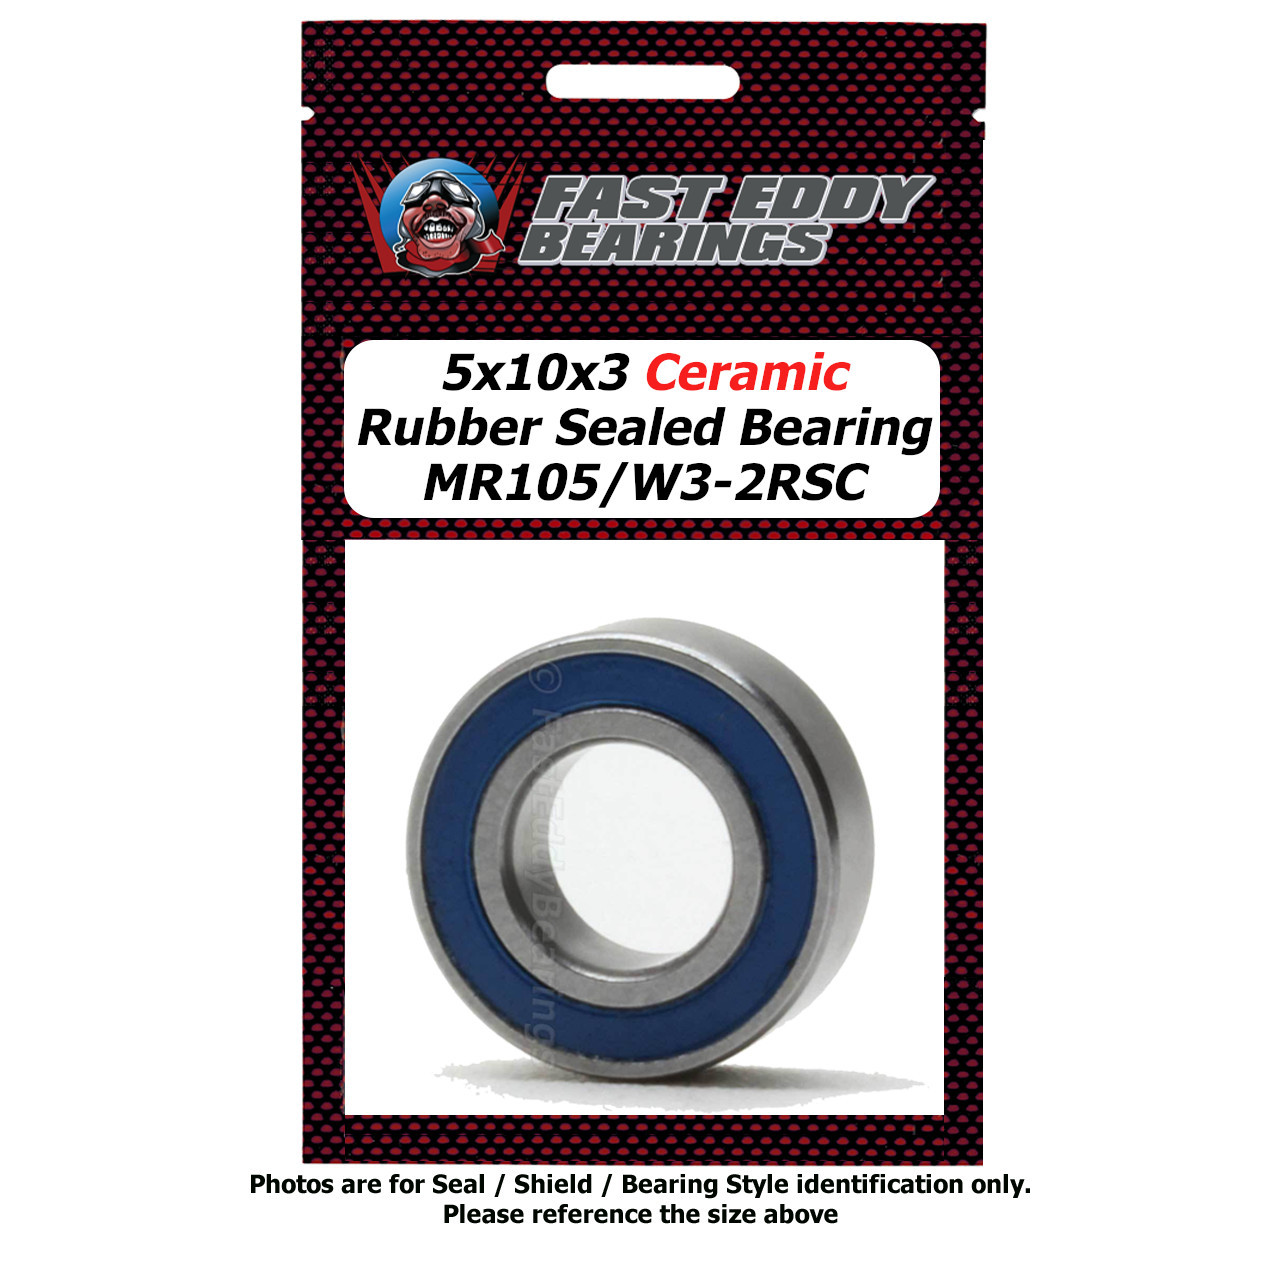 5X10X3 Ceramic Rubber Sealed Bearing MR105/W3-2RSC